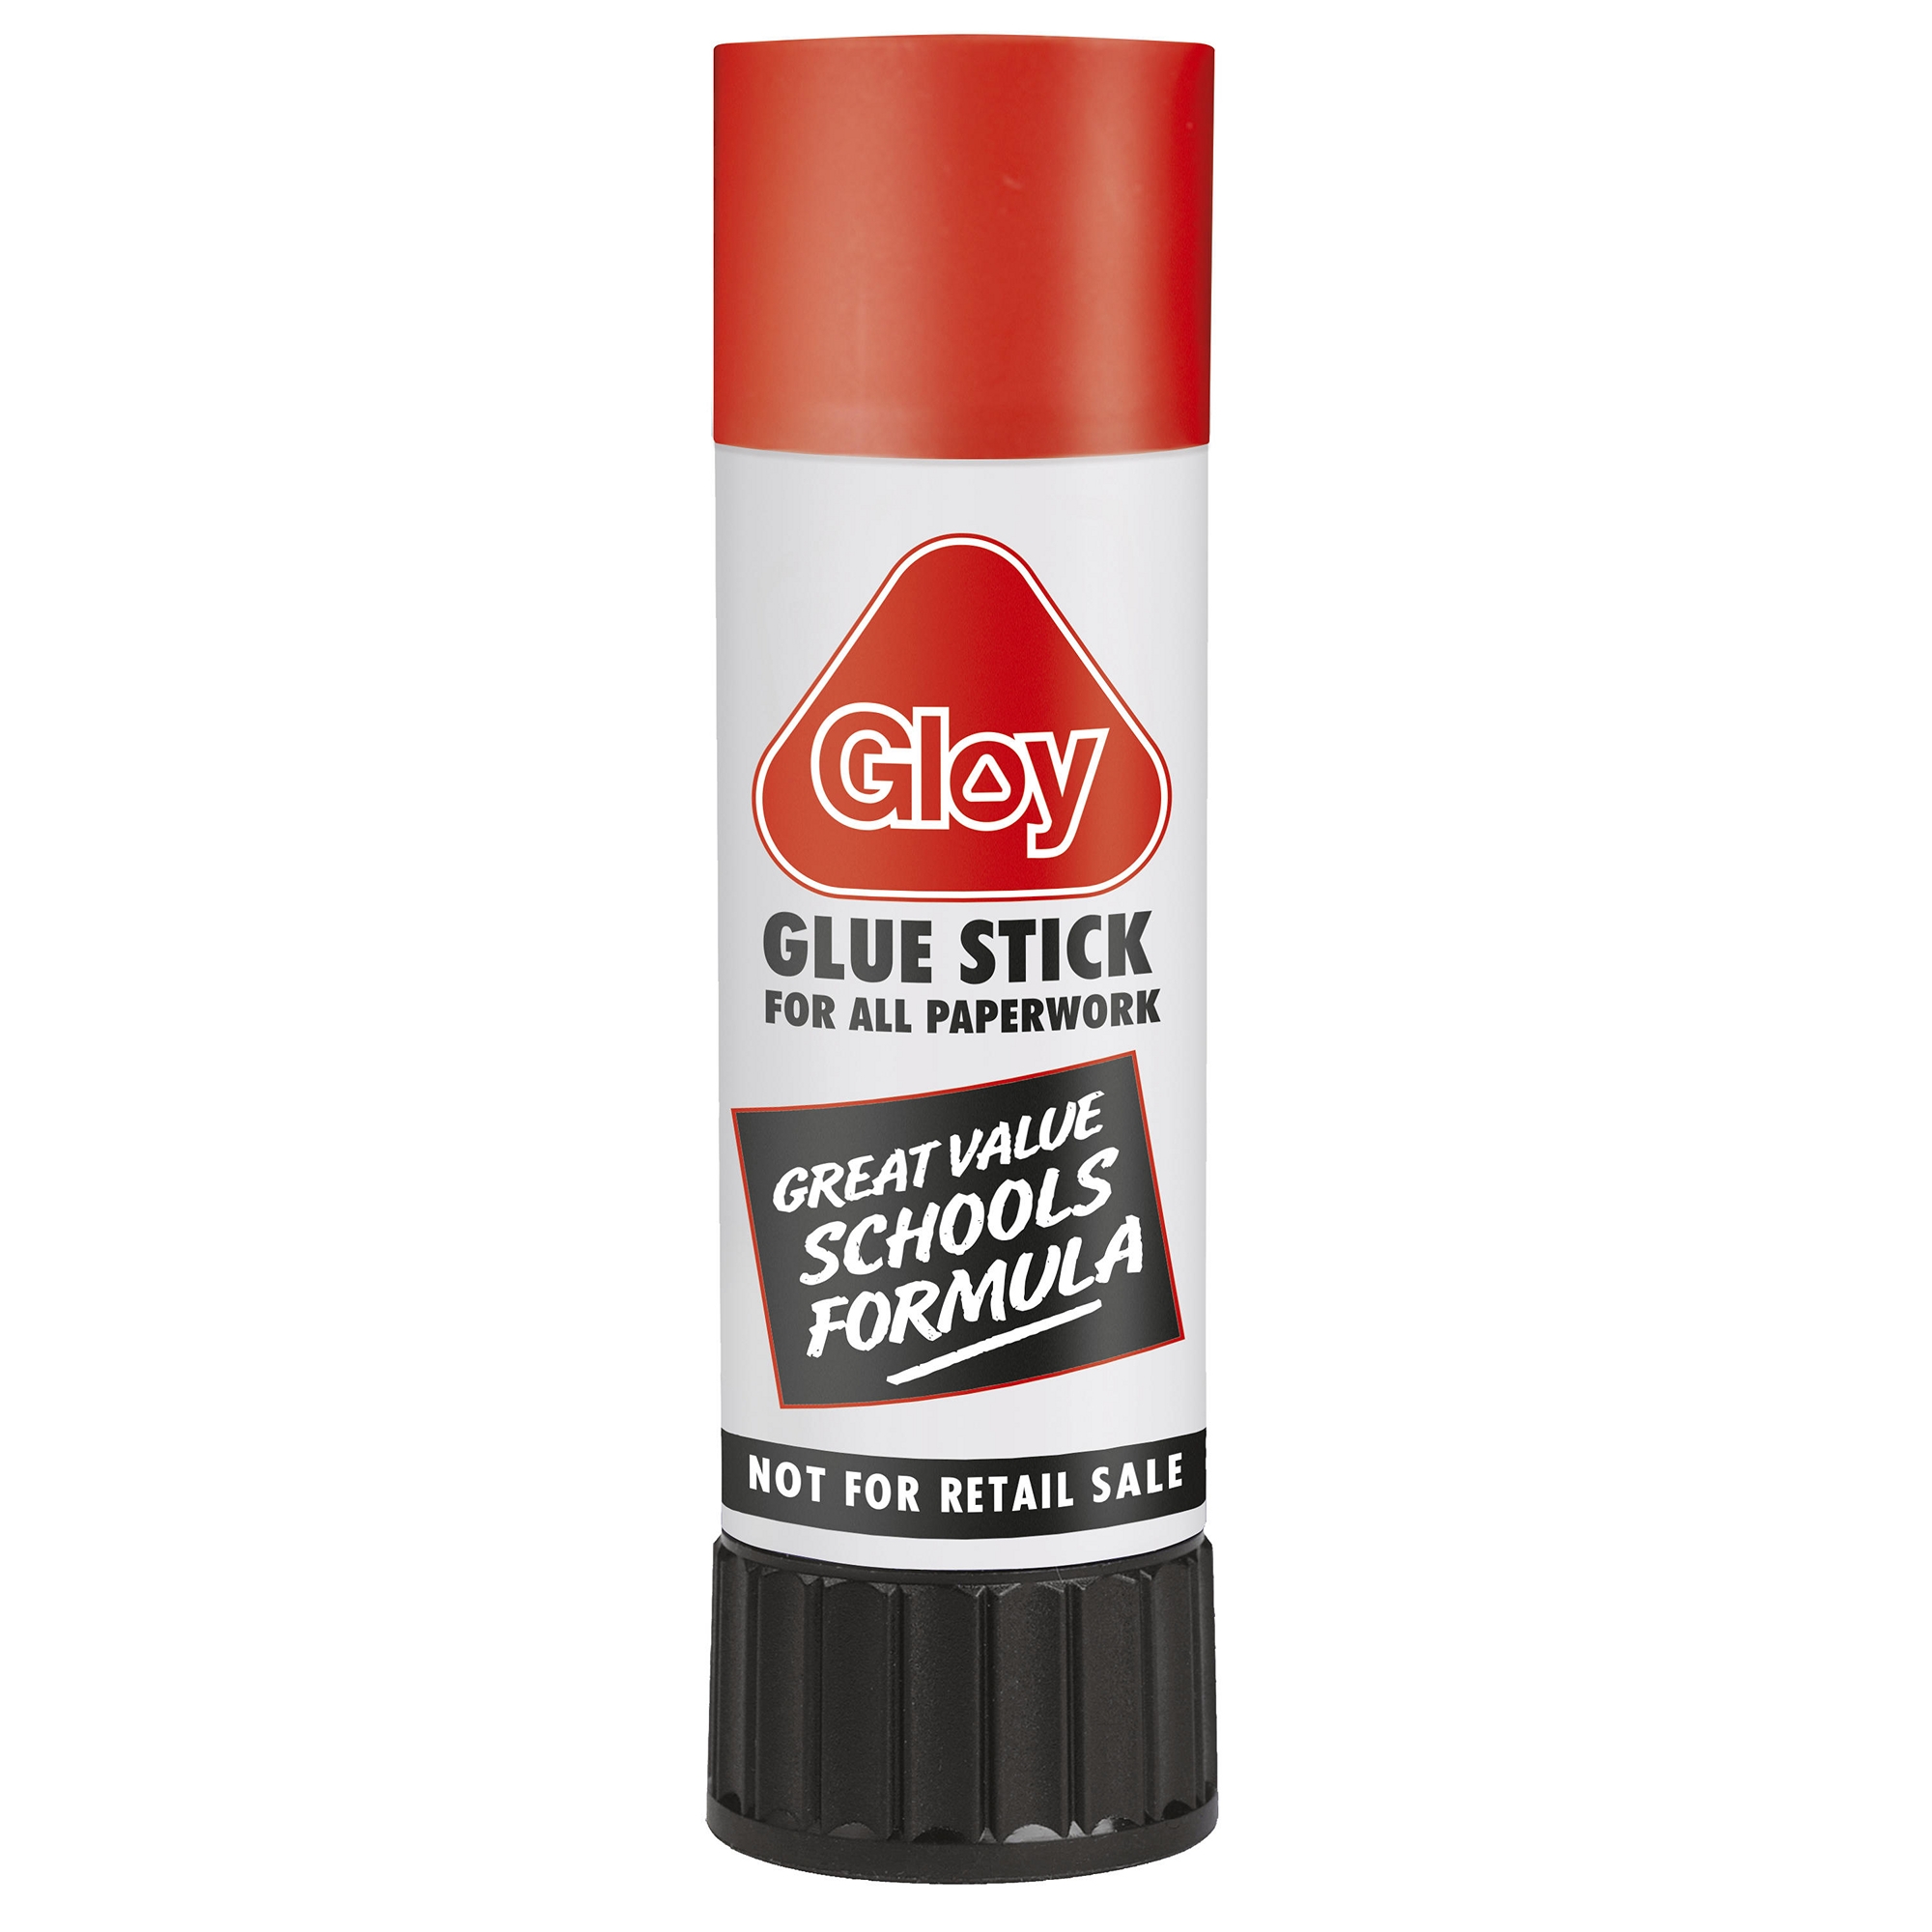 Gloy Glue Stick - 20g - Pack of 30